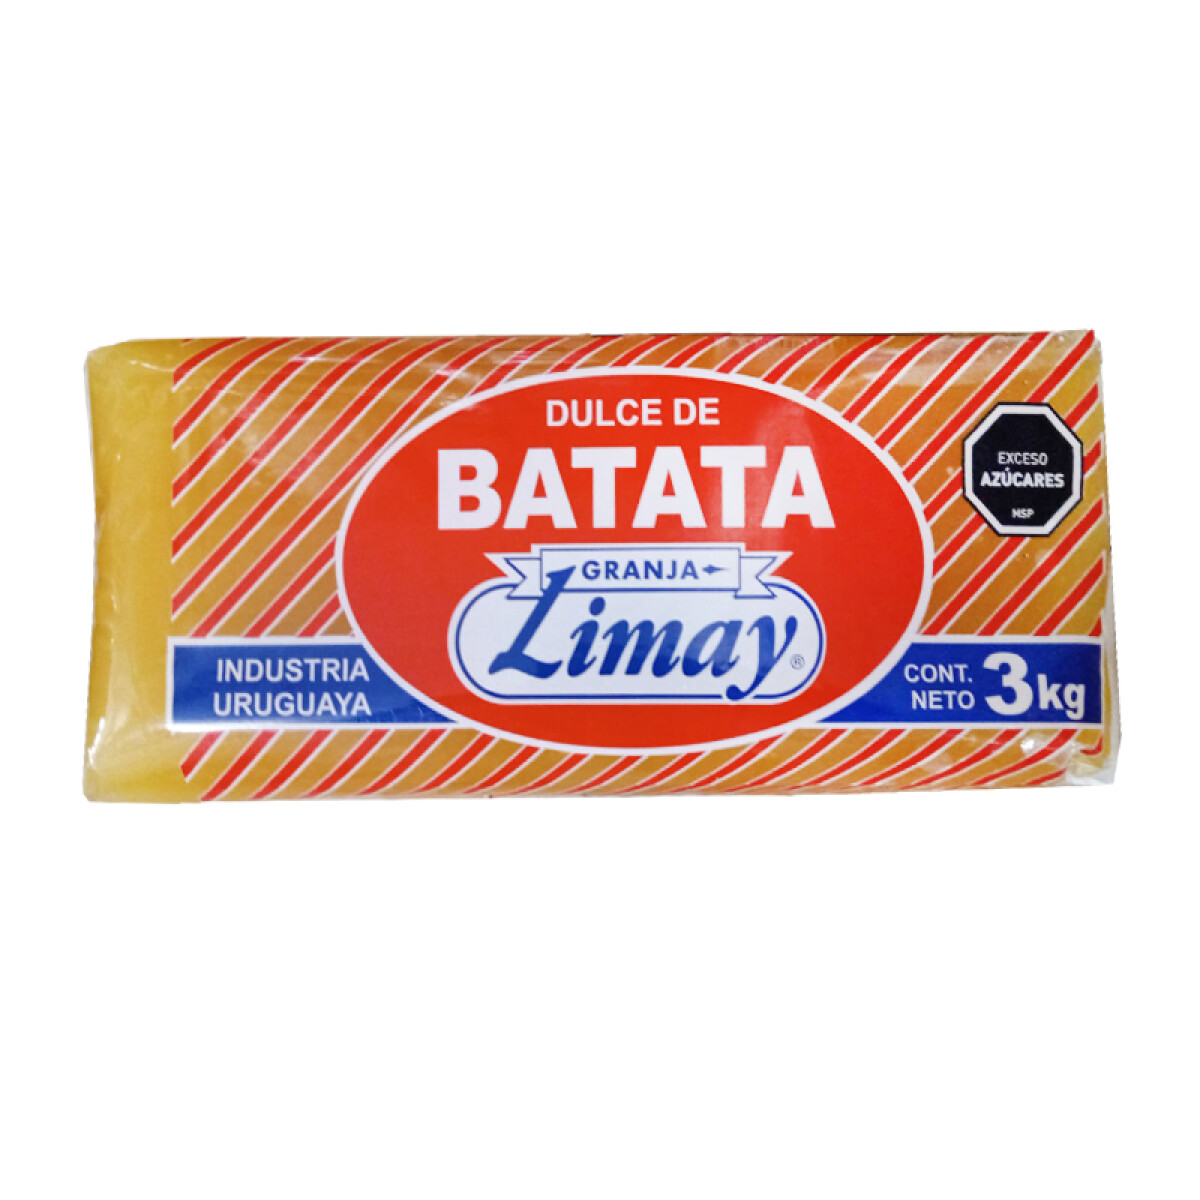 Dulce de Batata RETOÑO (LIMAY) 3KG 